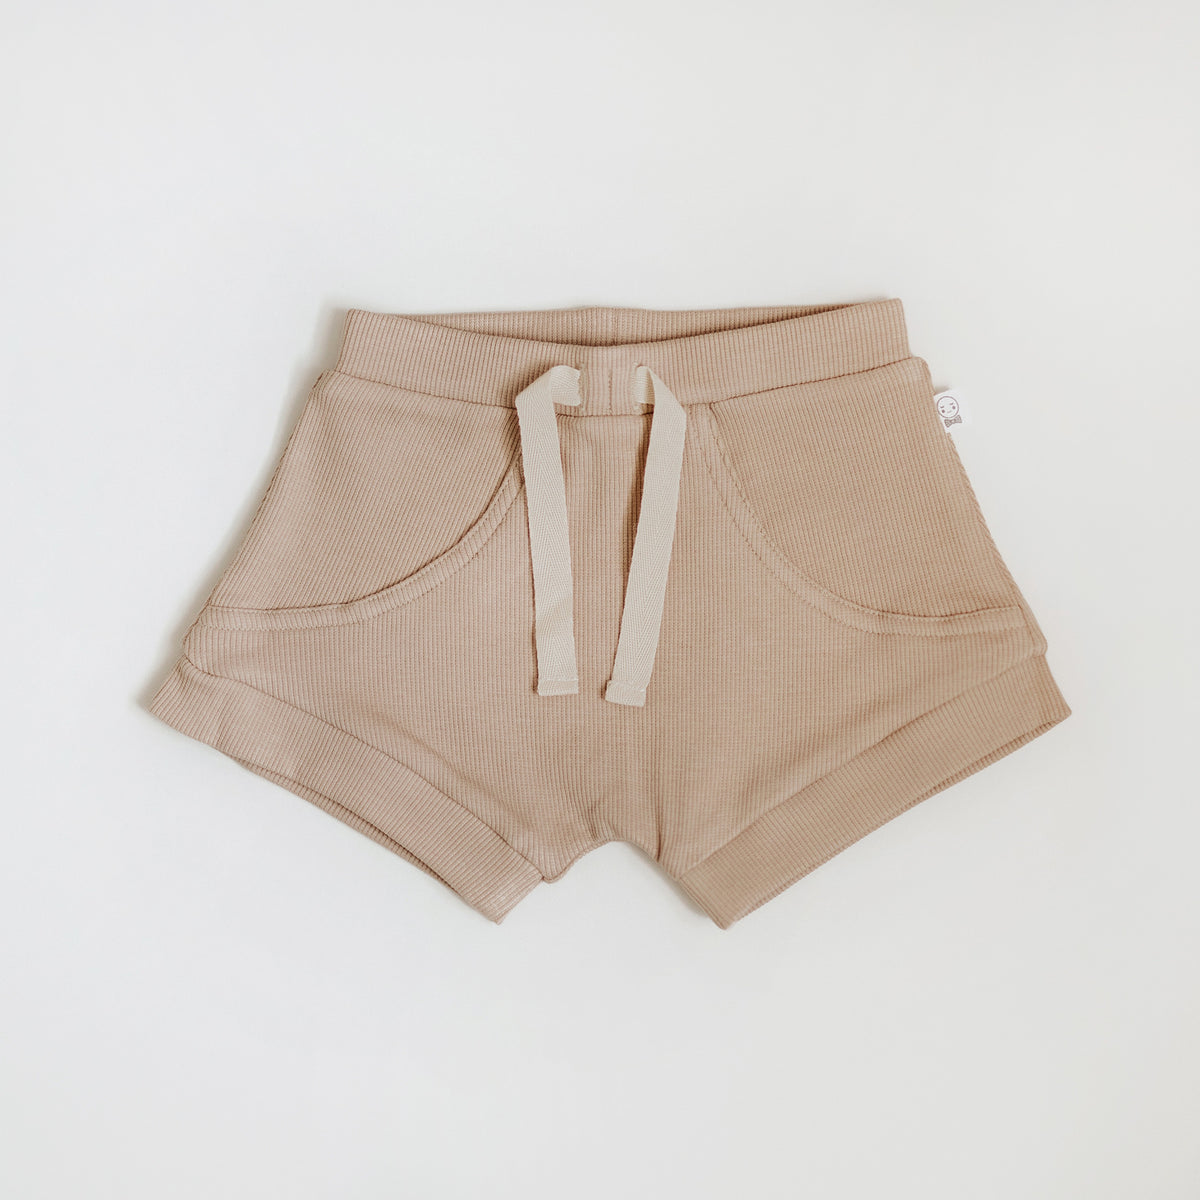 Snuggle Hunny Organic Cotton Shorts - Pebble